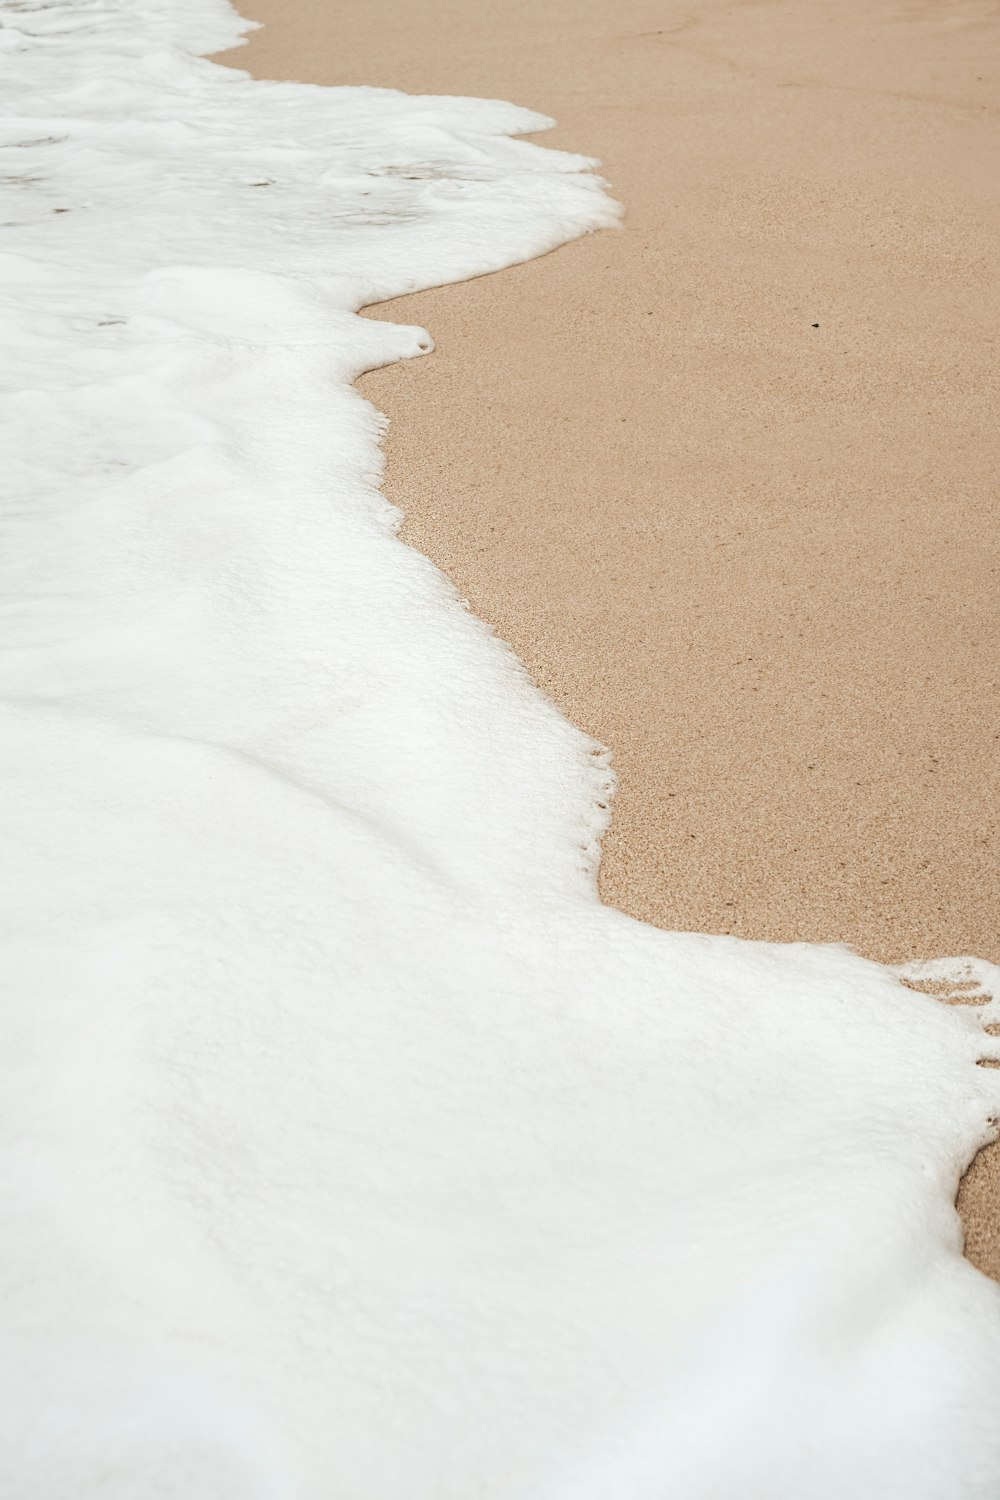 neve bianca su sabbia marrone